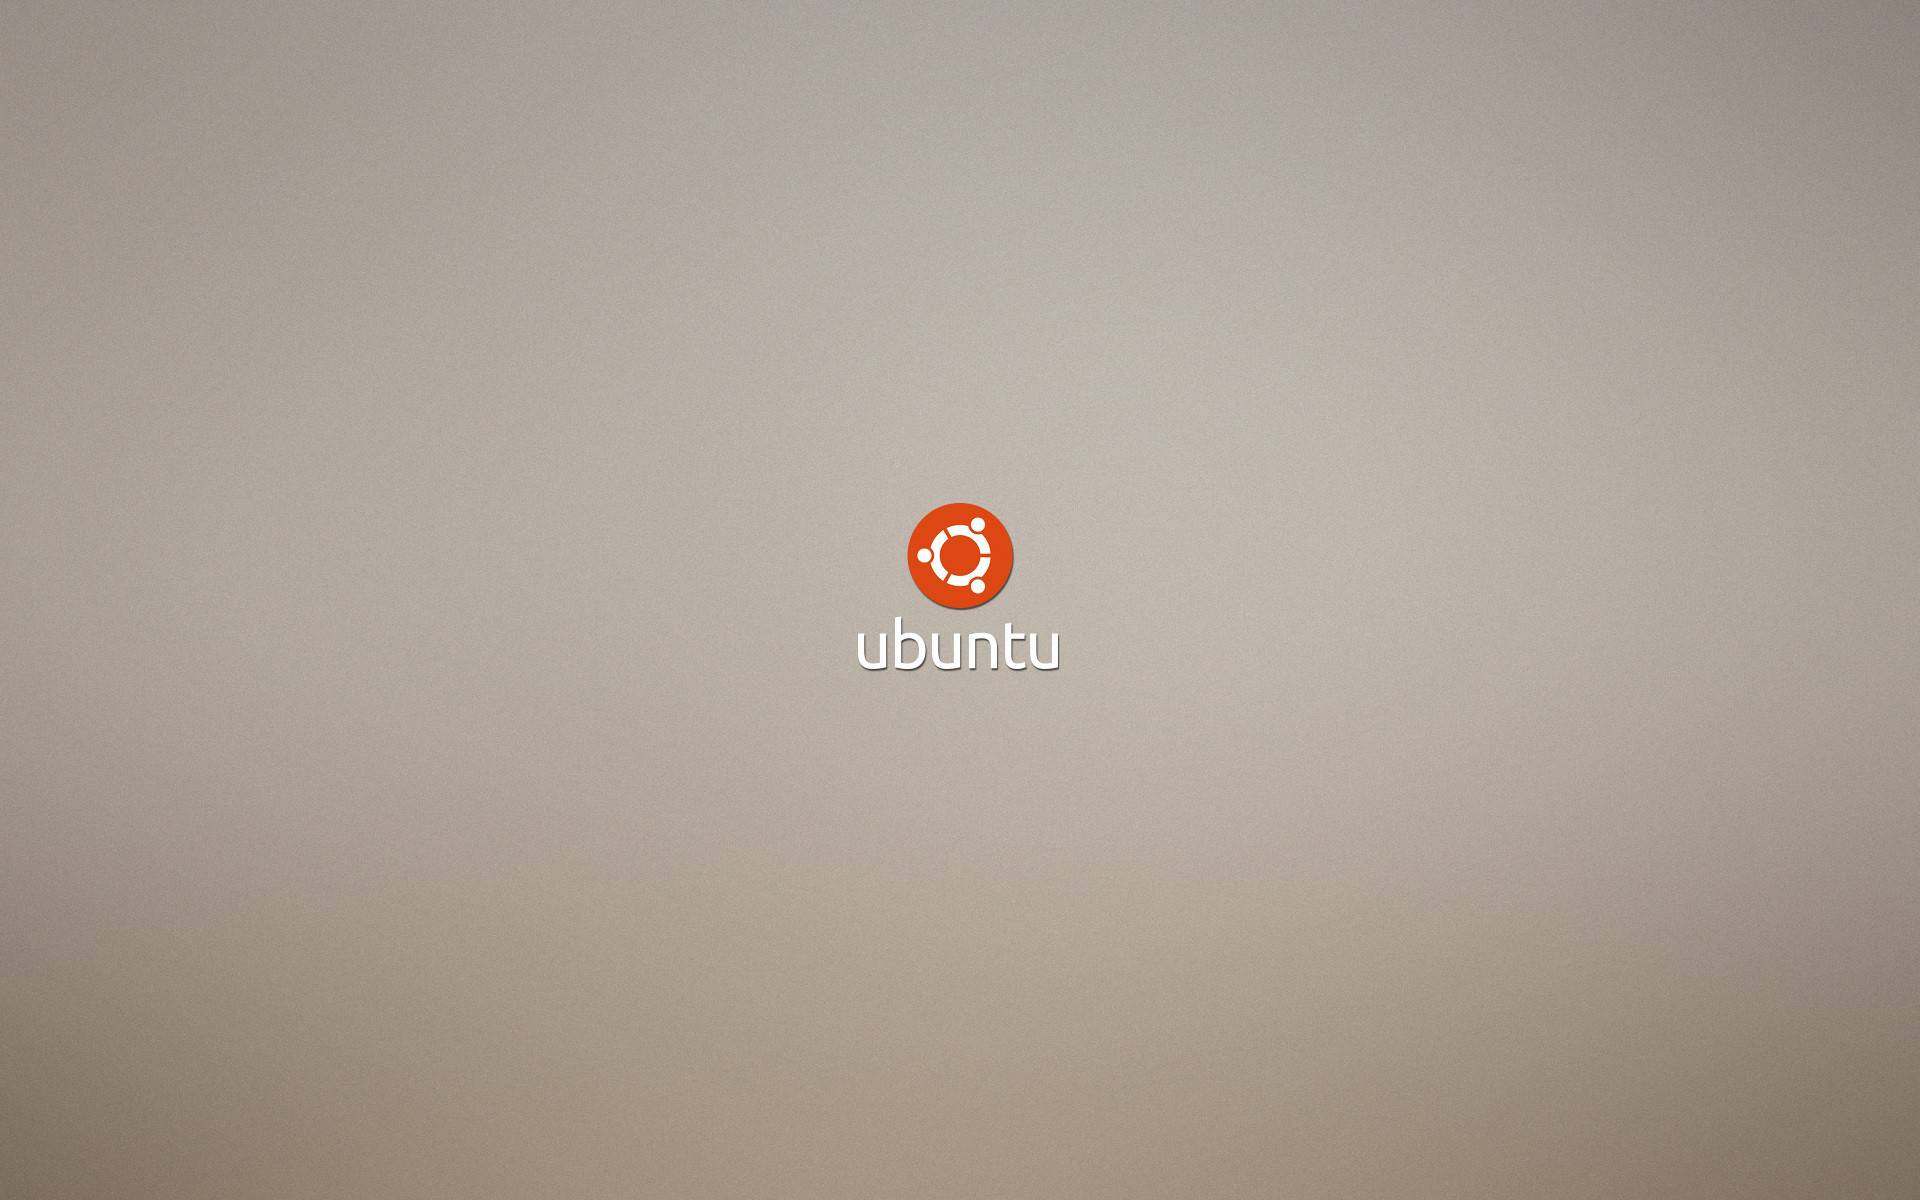 Ubuntu Studio wallpaper